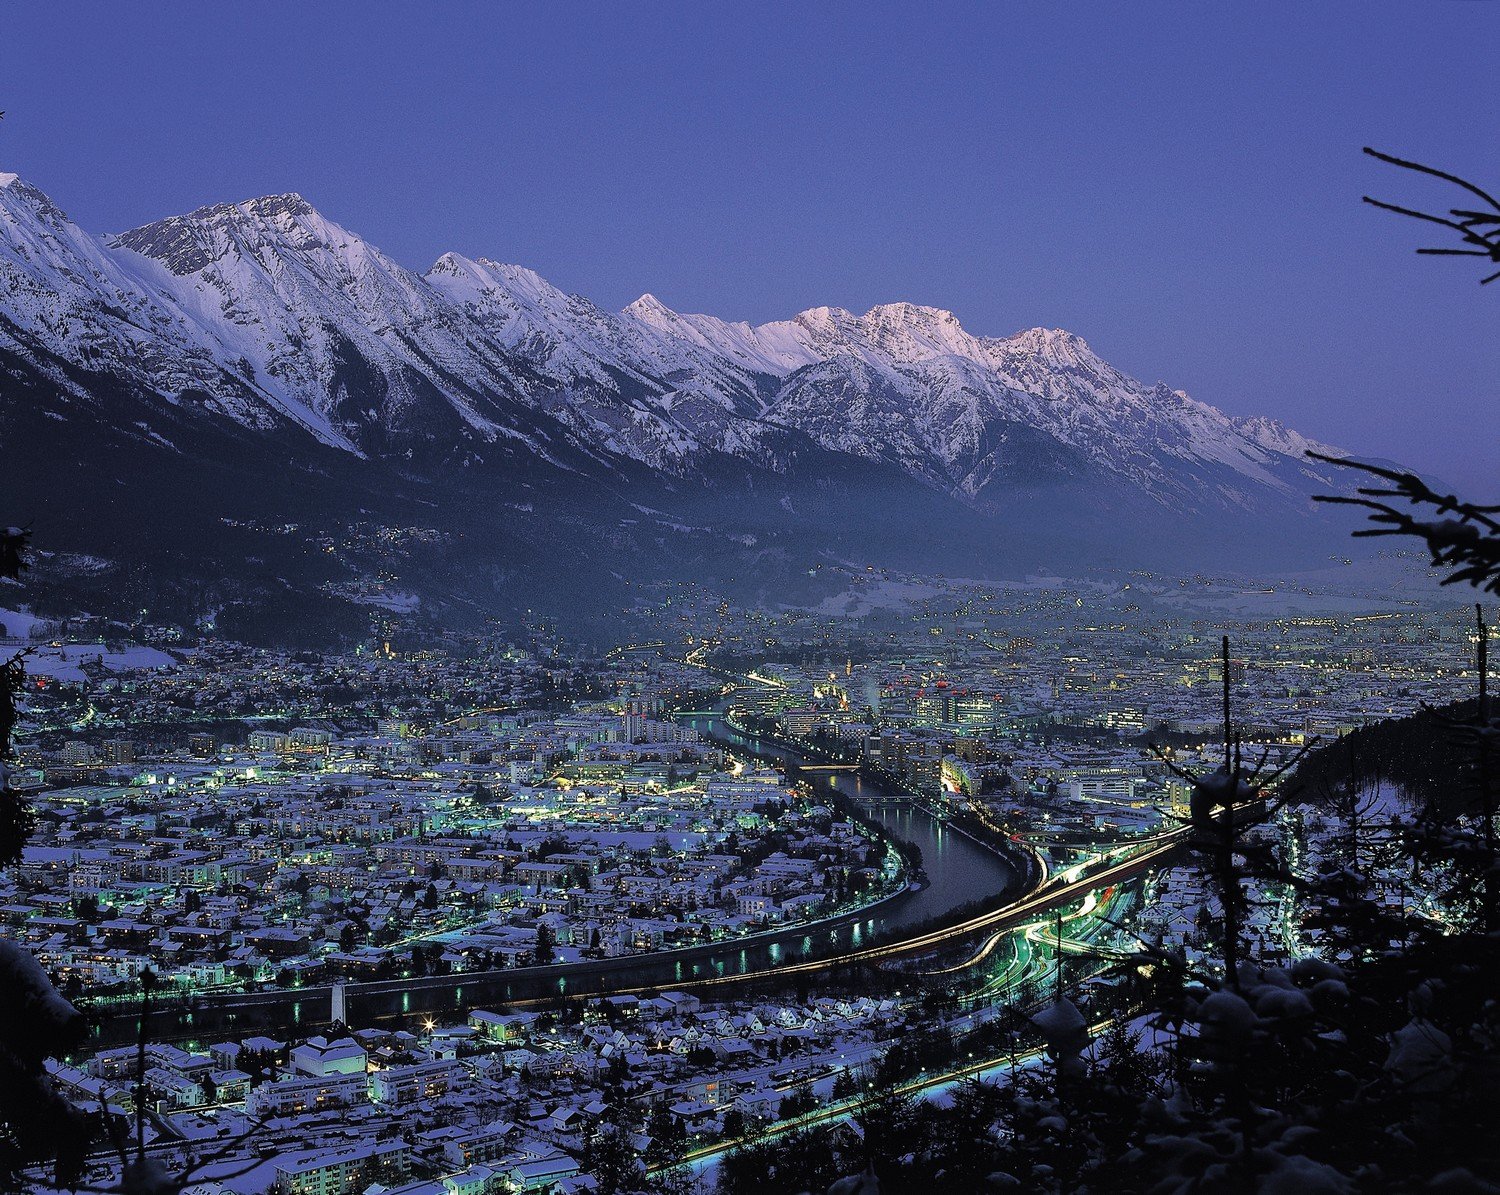 Panorama di Innsbruck in inverno ©Foto © Österreich Werbung, Josef Mallaun